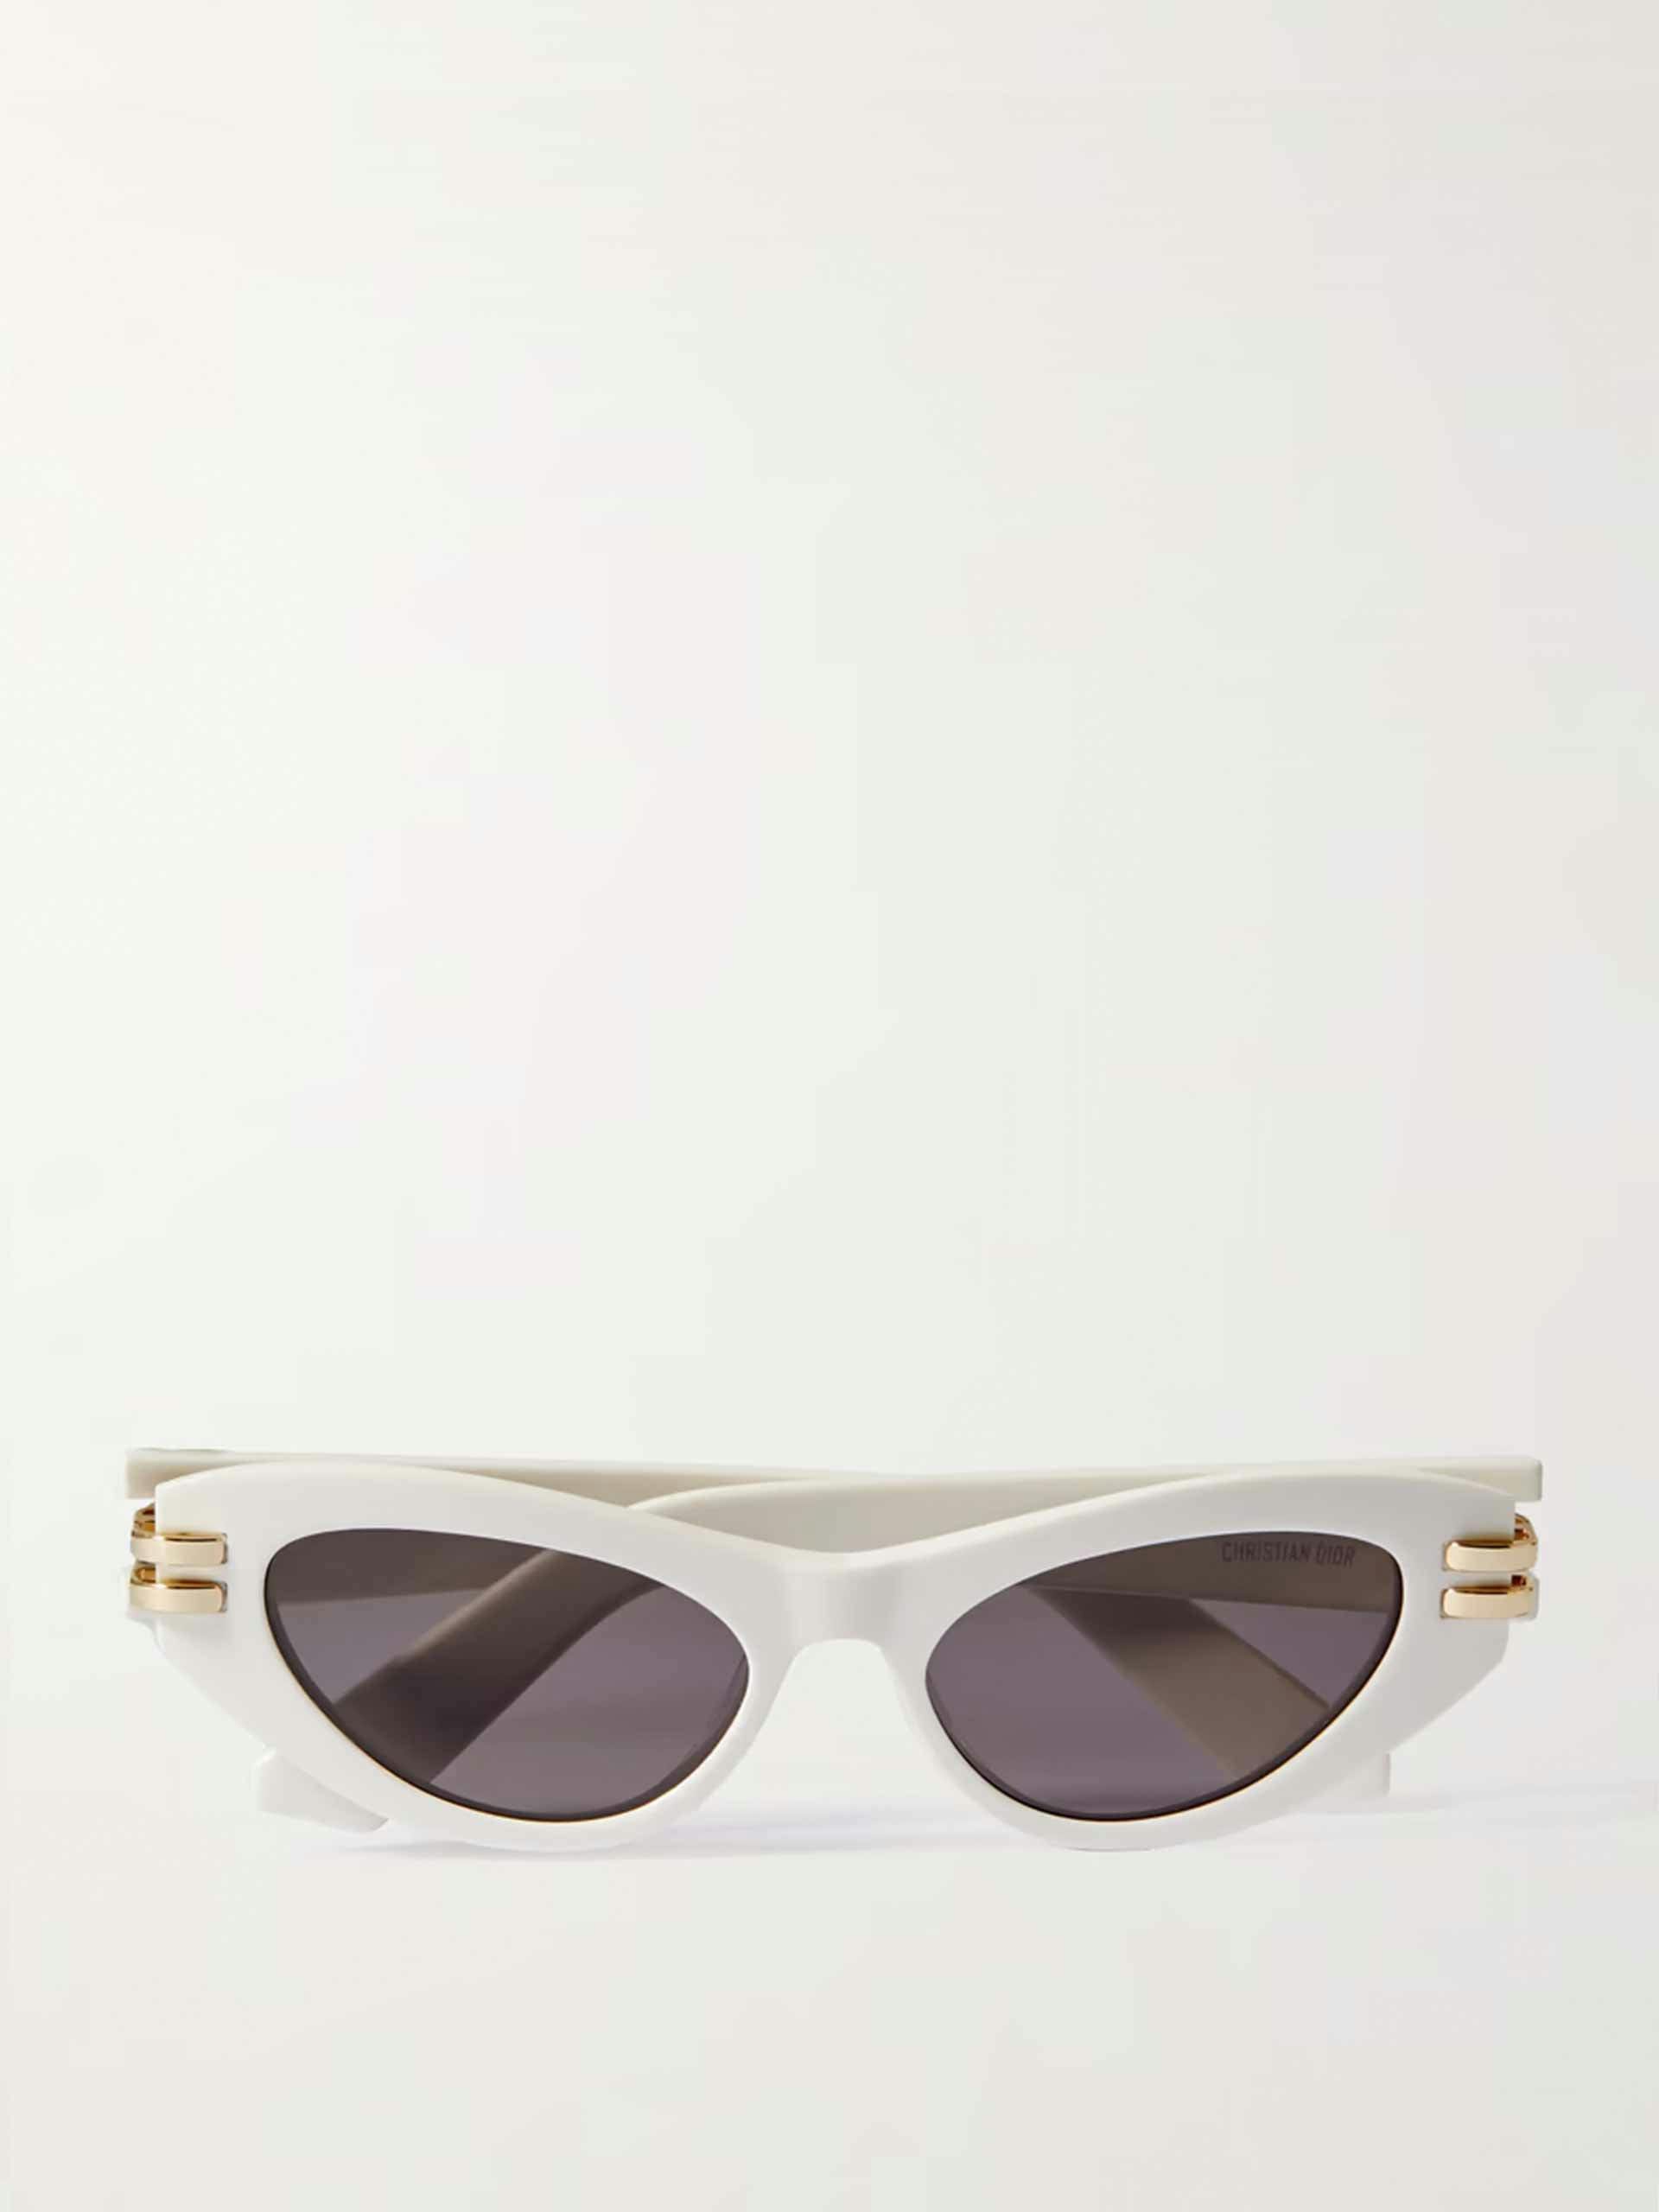 CDior B1U cat-eye acetate and gold-tone sunglasses